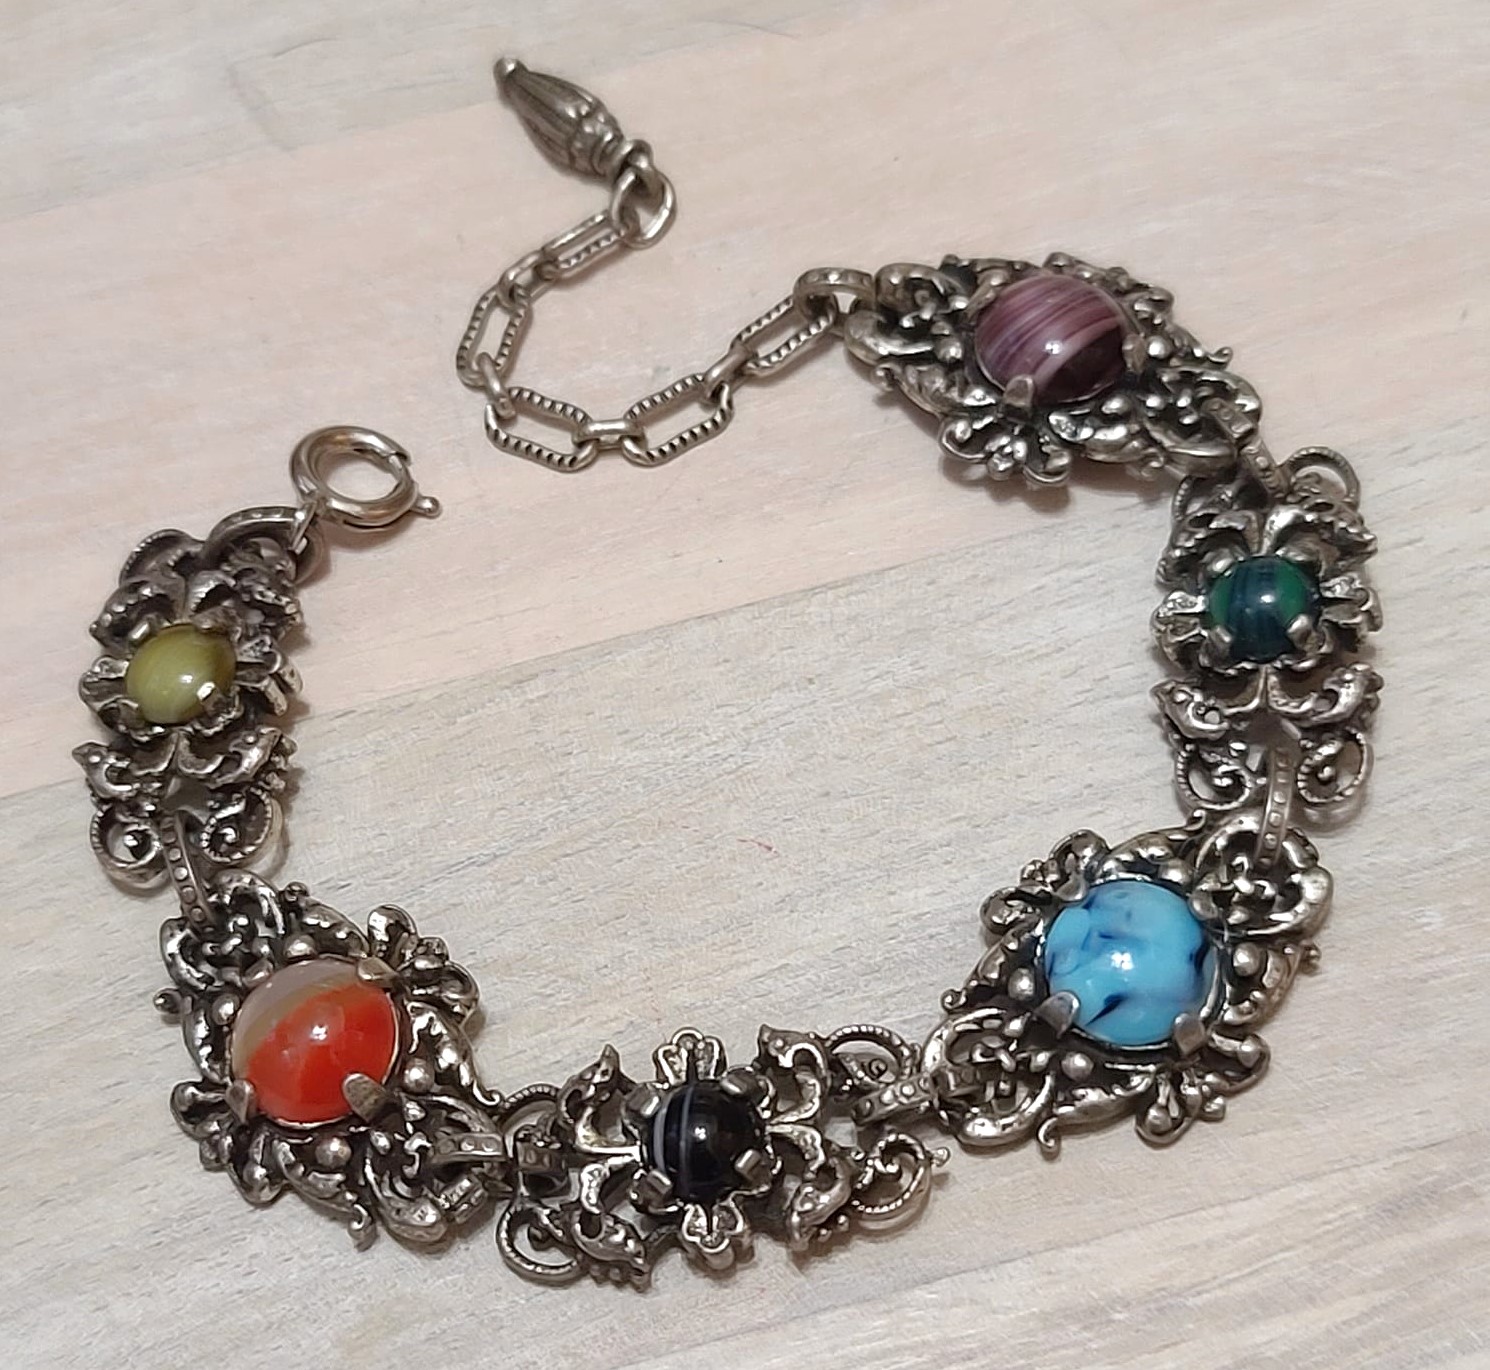 Vintage ornate bracelet, with multi color cabachons and filigree metal